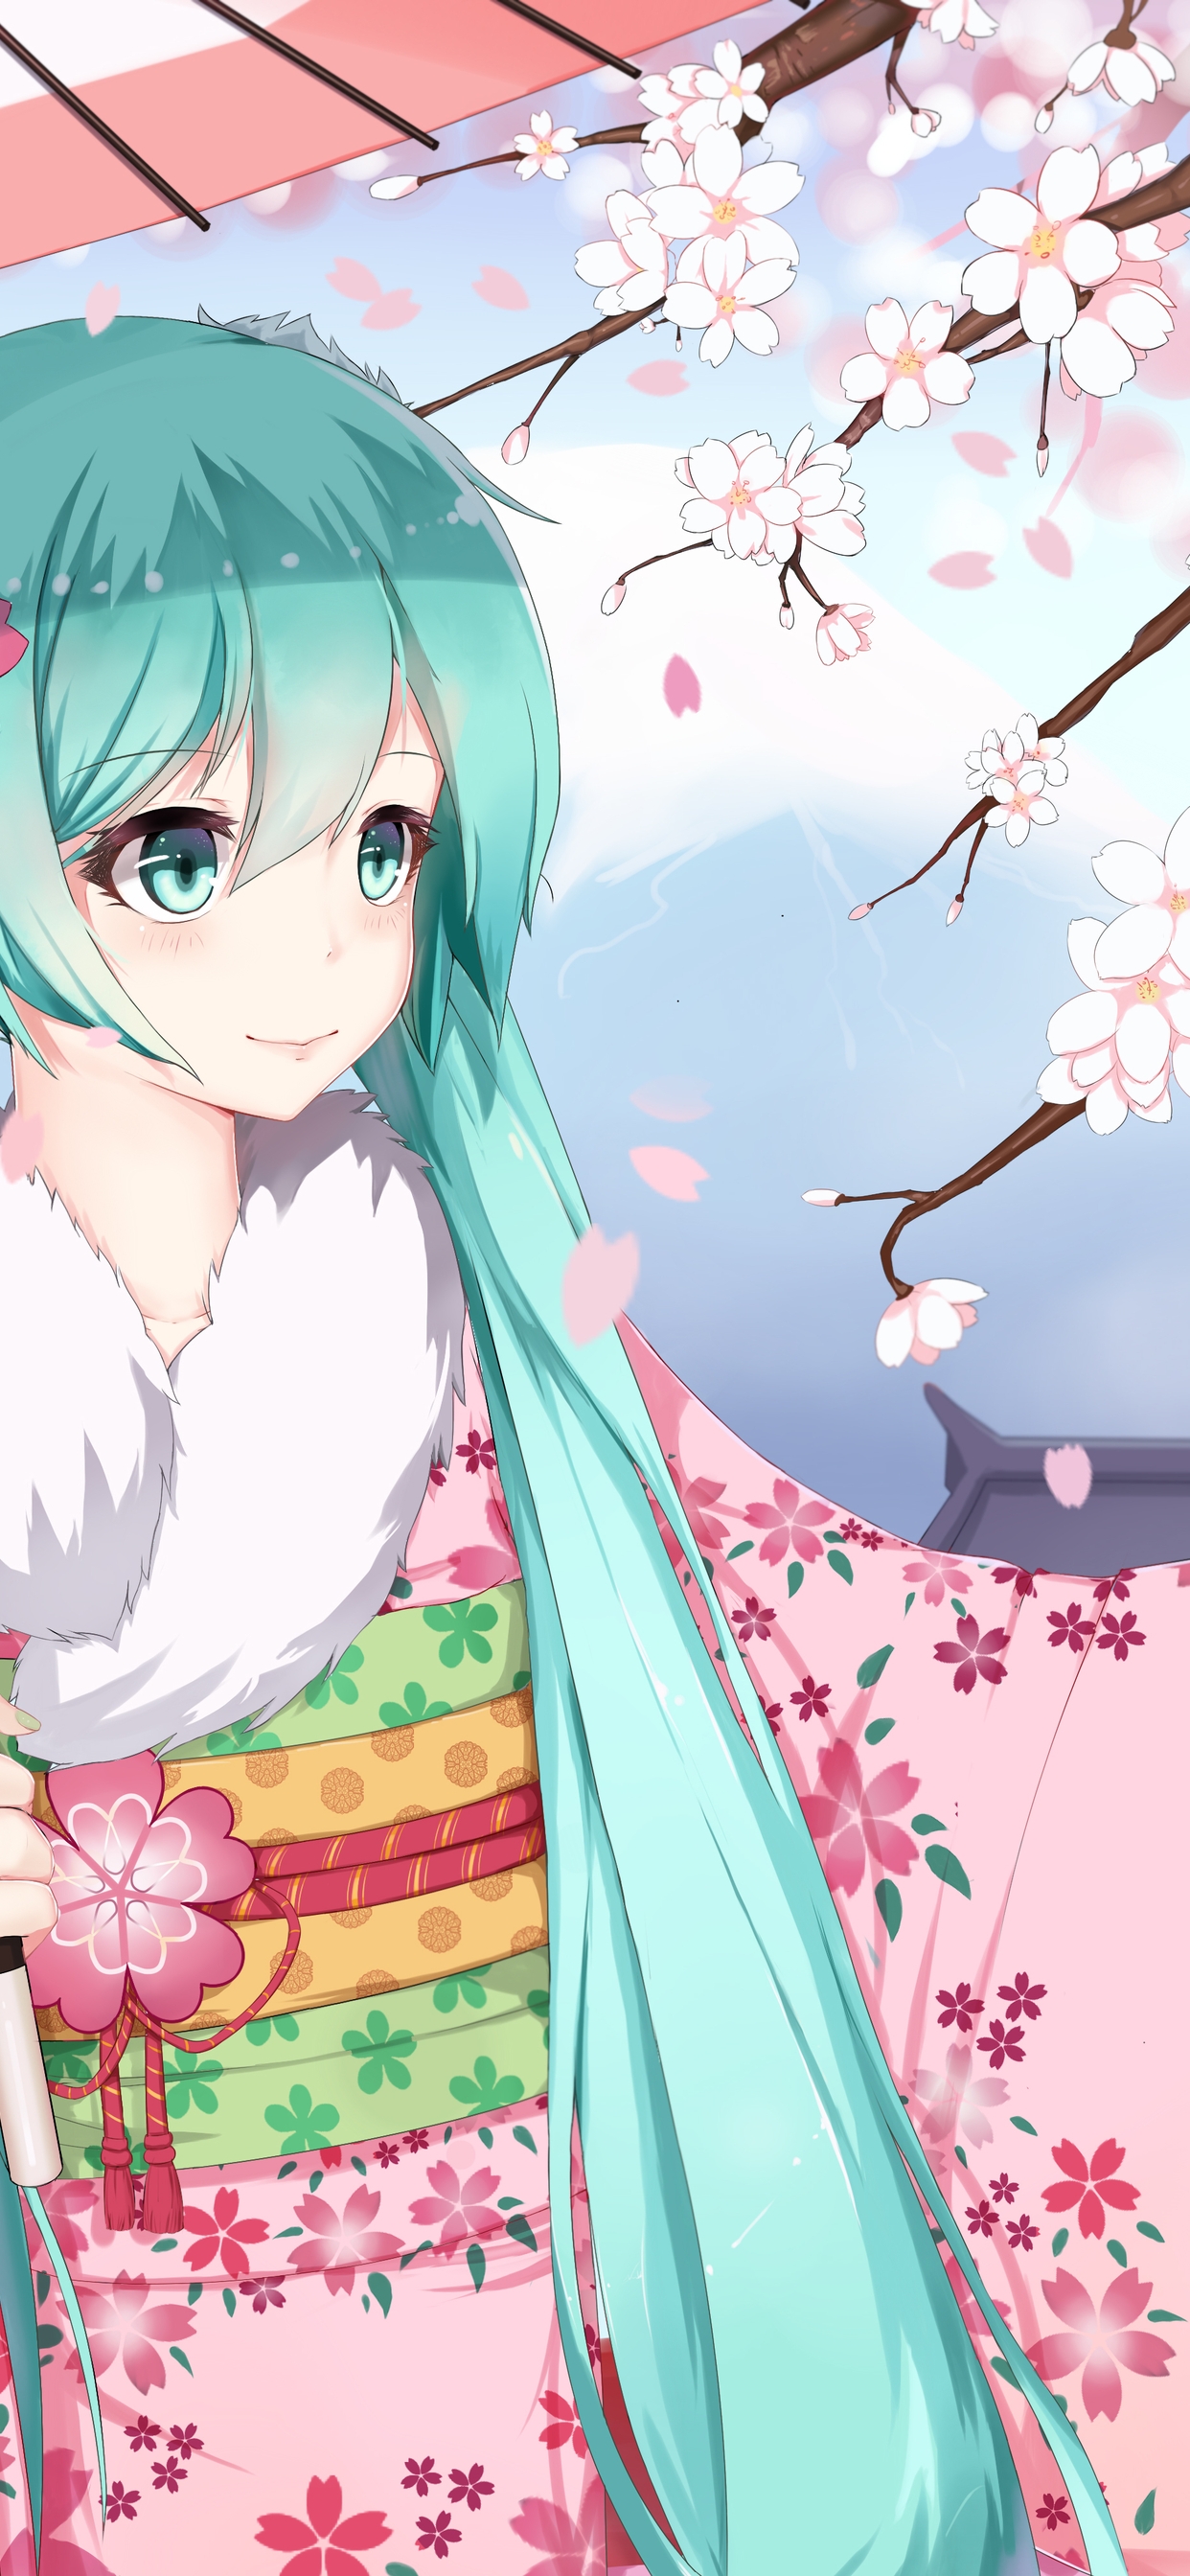 Image: Girl, Hatsune Miku, blooming, Sakura, petals, kimono, hair, umbrella, vocaloid